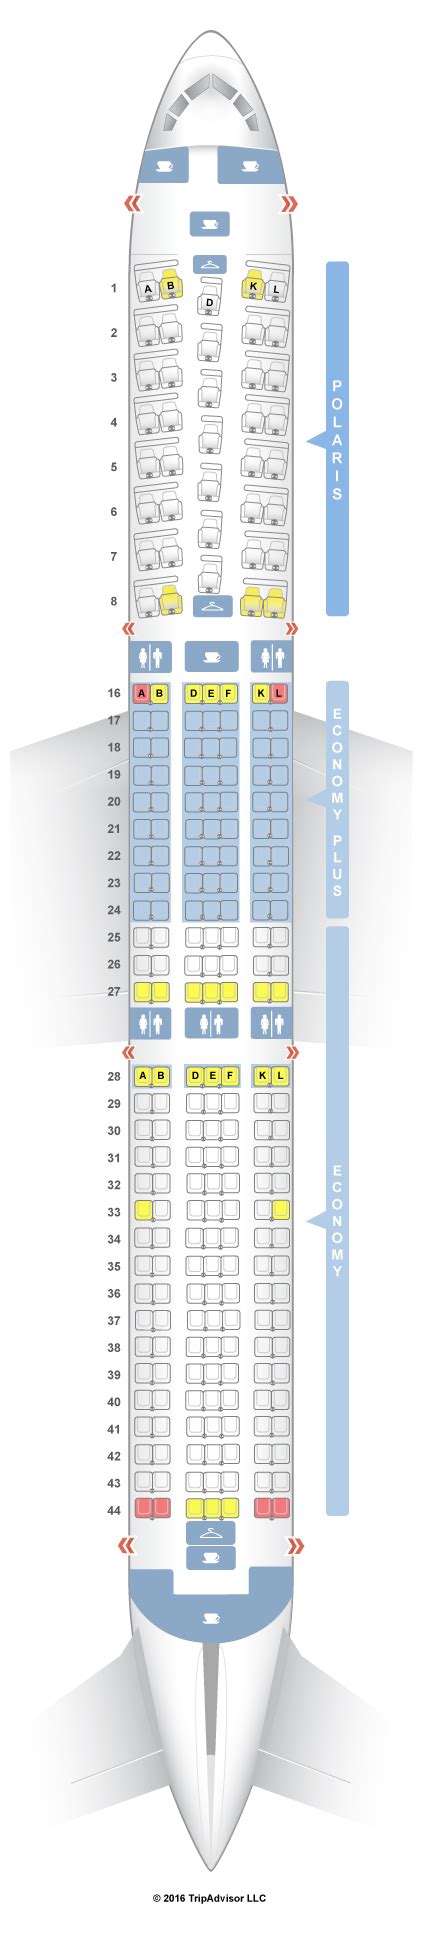 boeing 767-400er seat map united